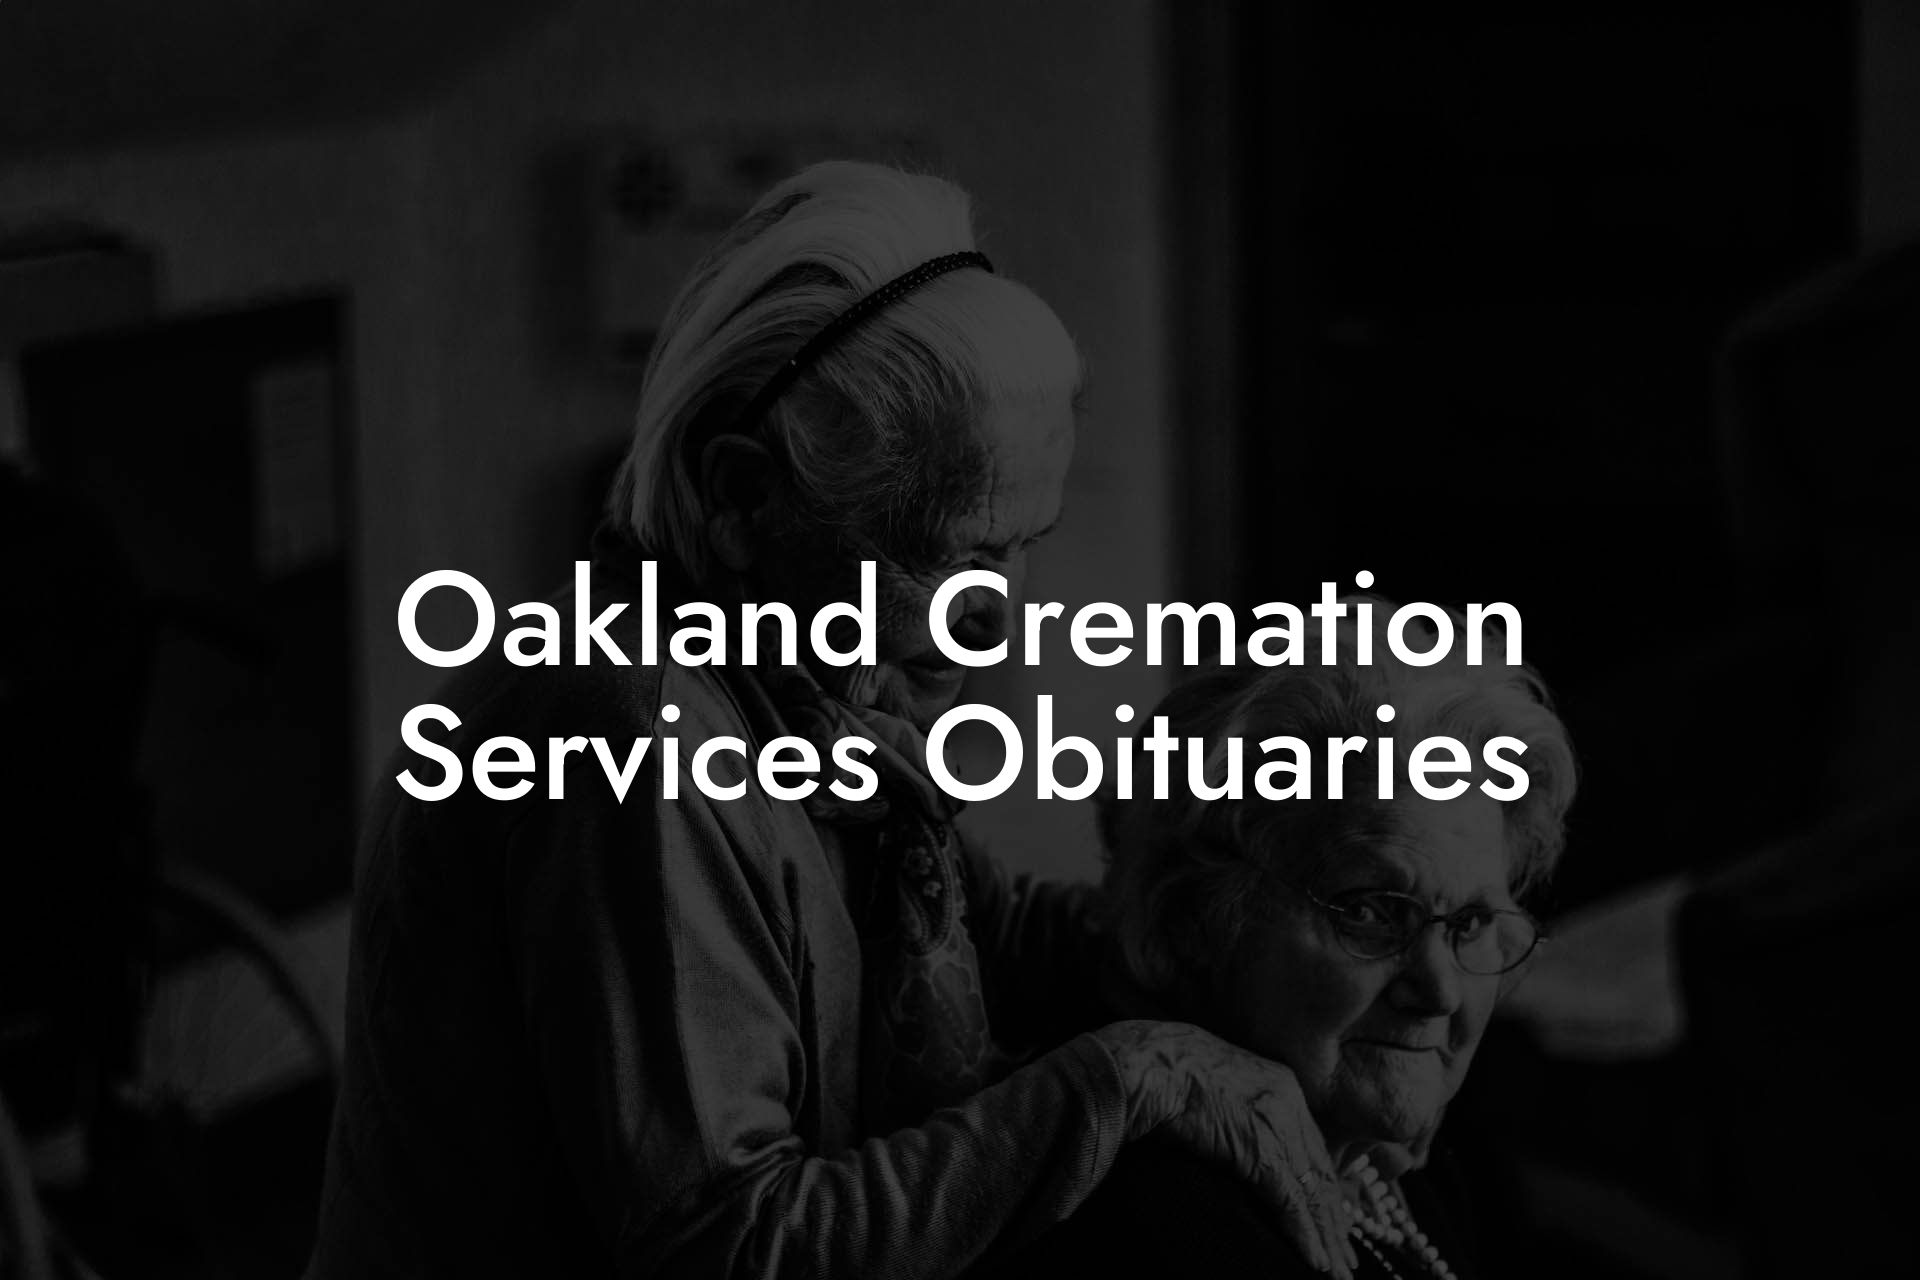 Oakland Cremation Services Obituaries